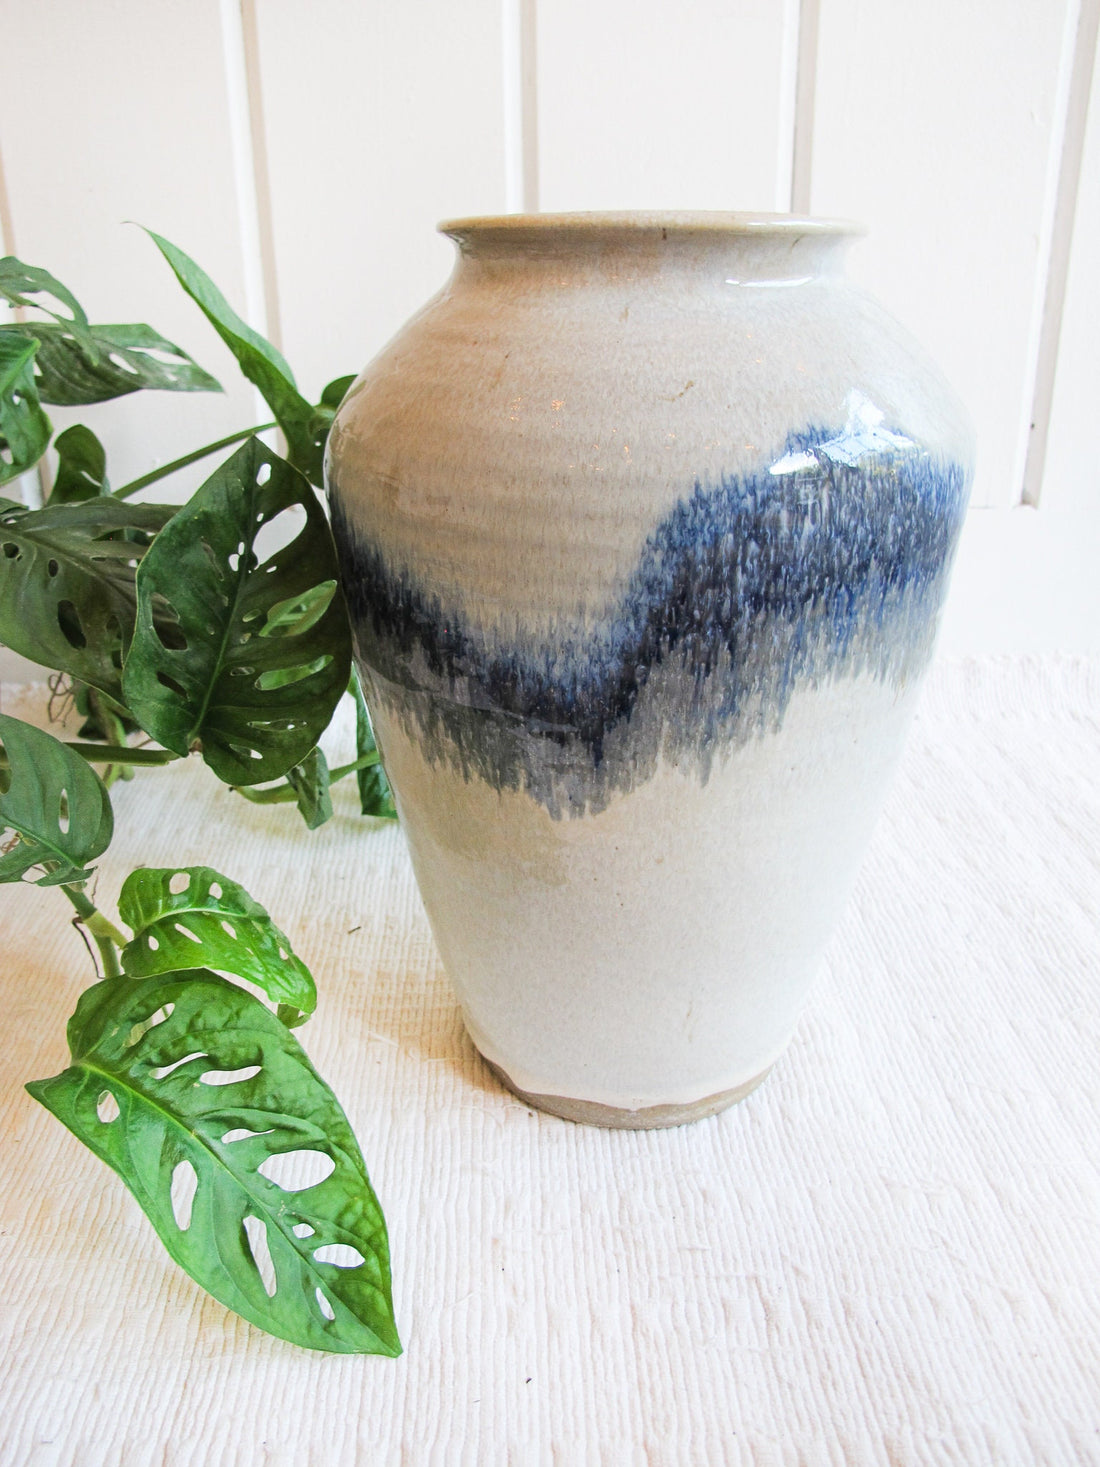 Ceramic Floor Pot Vase with White and Bright Indigo drip Glaze